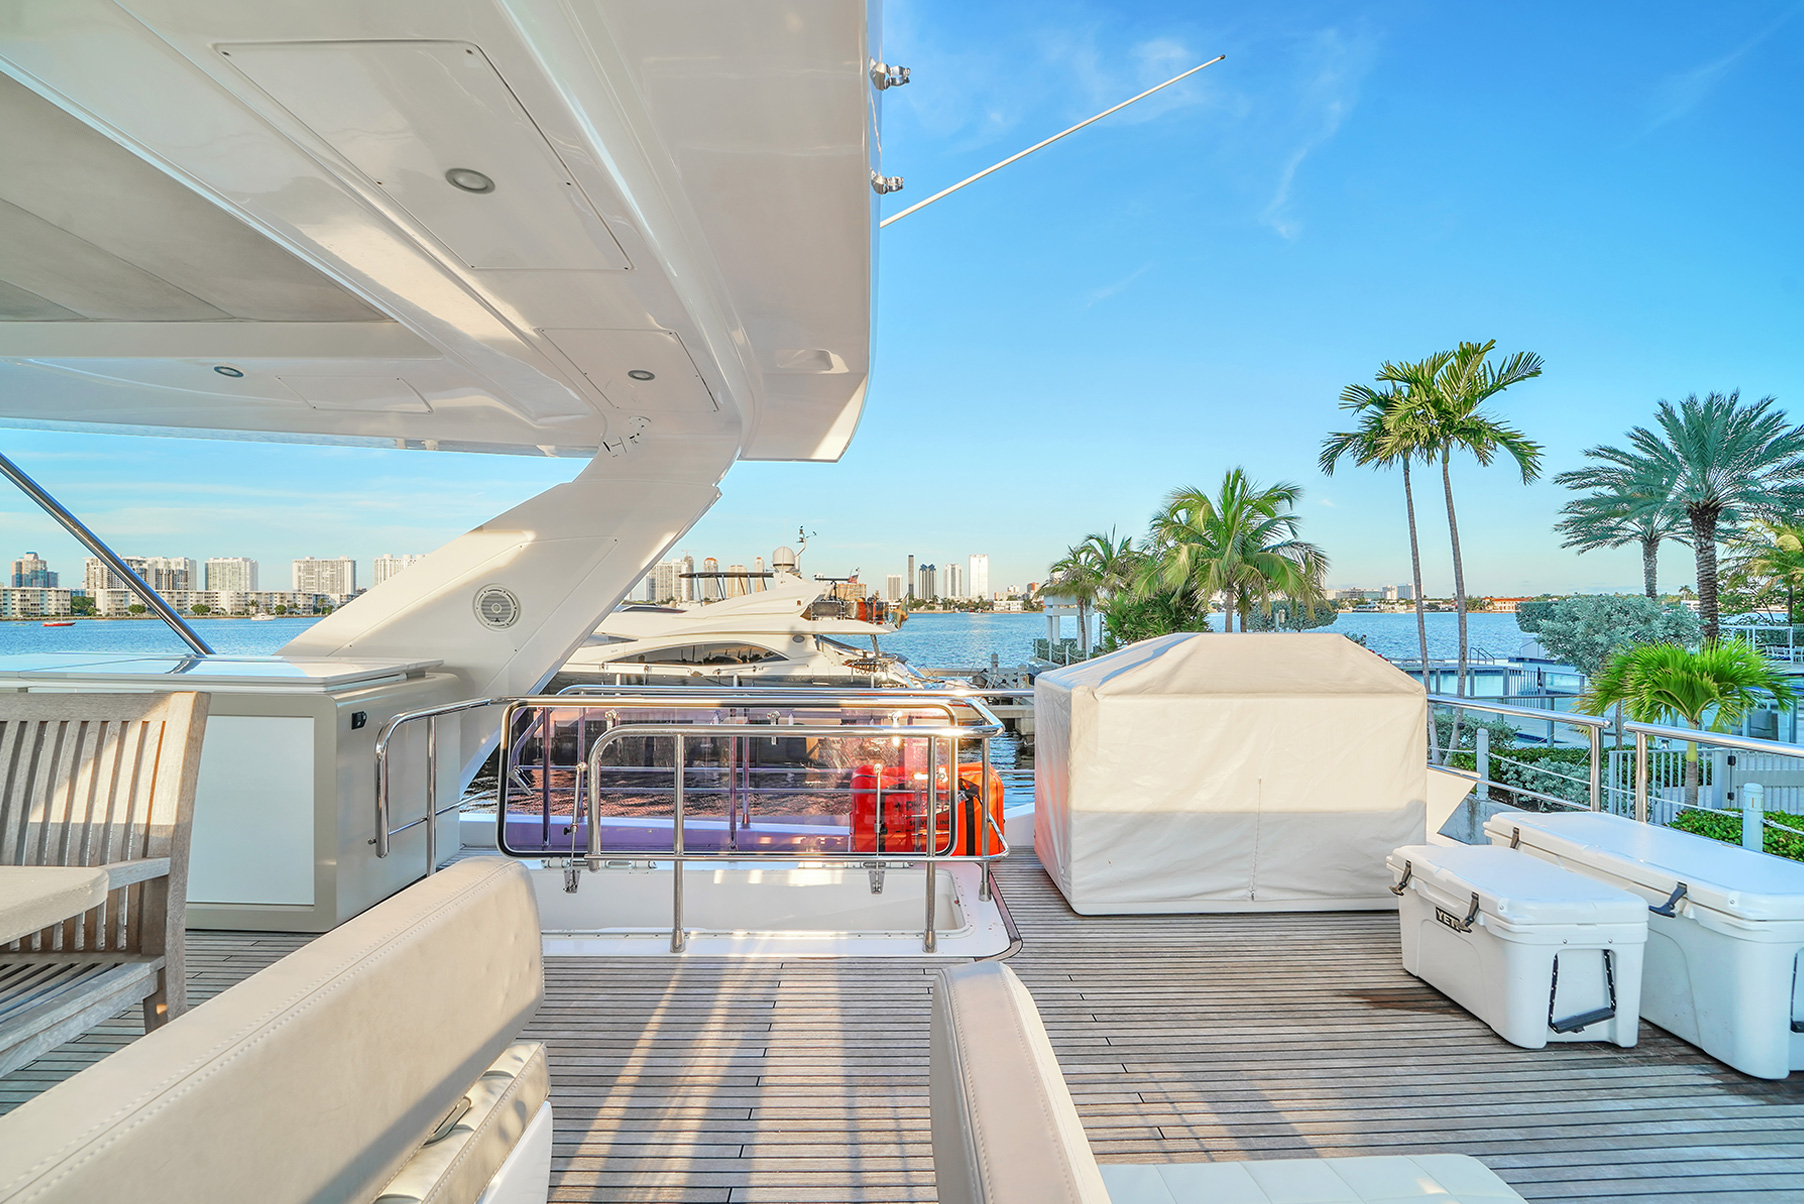 yacht rental miami with slide